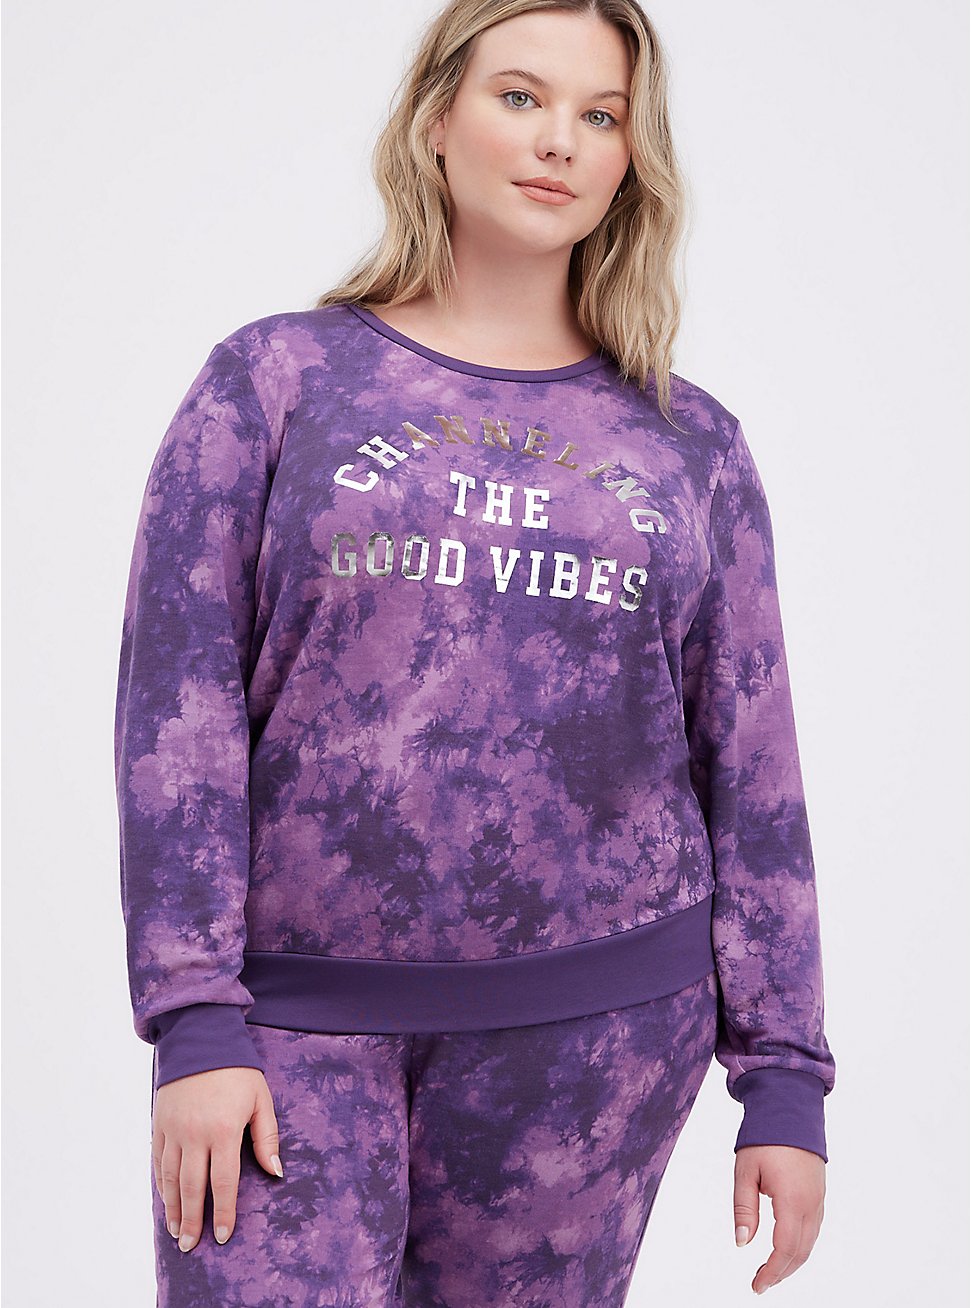 Plus Size Sleep Sweatshirt - Dream Fleece Tie Dye Purple, MULTI, hi-res